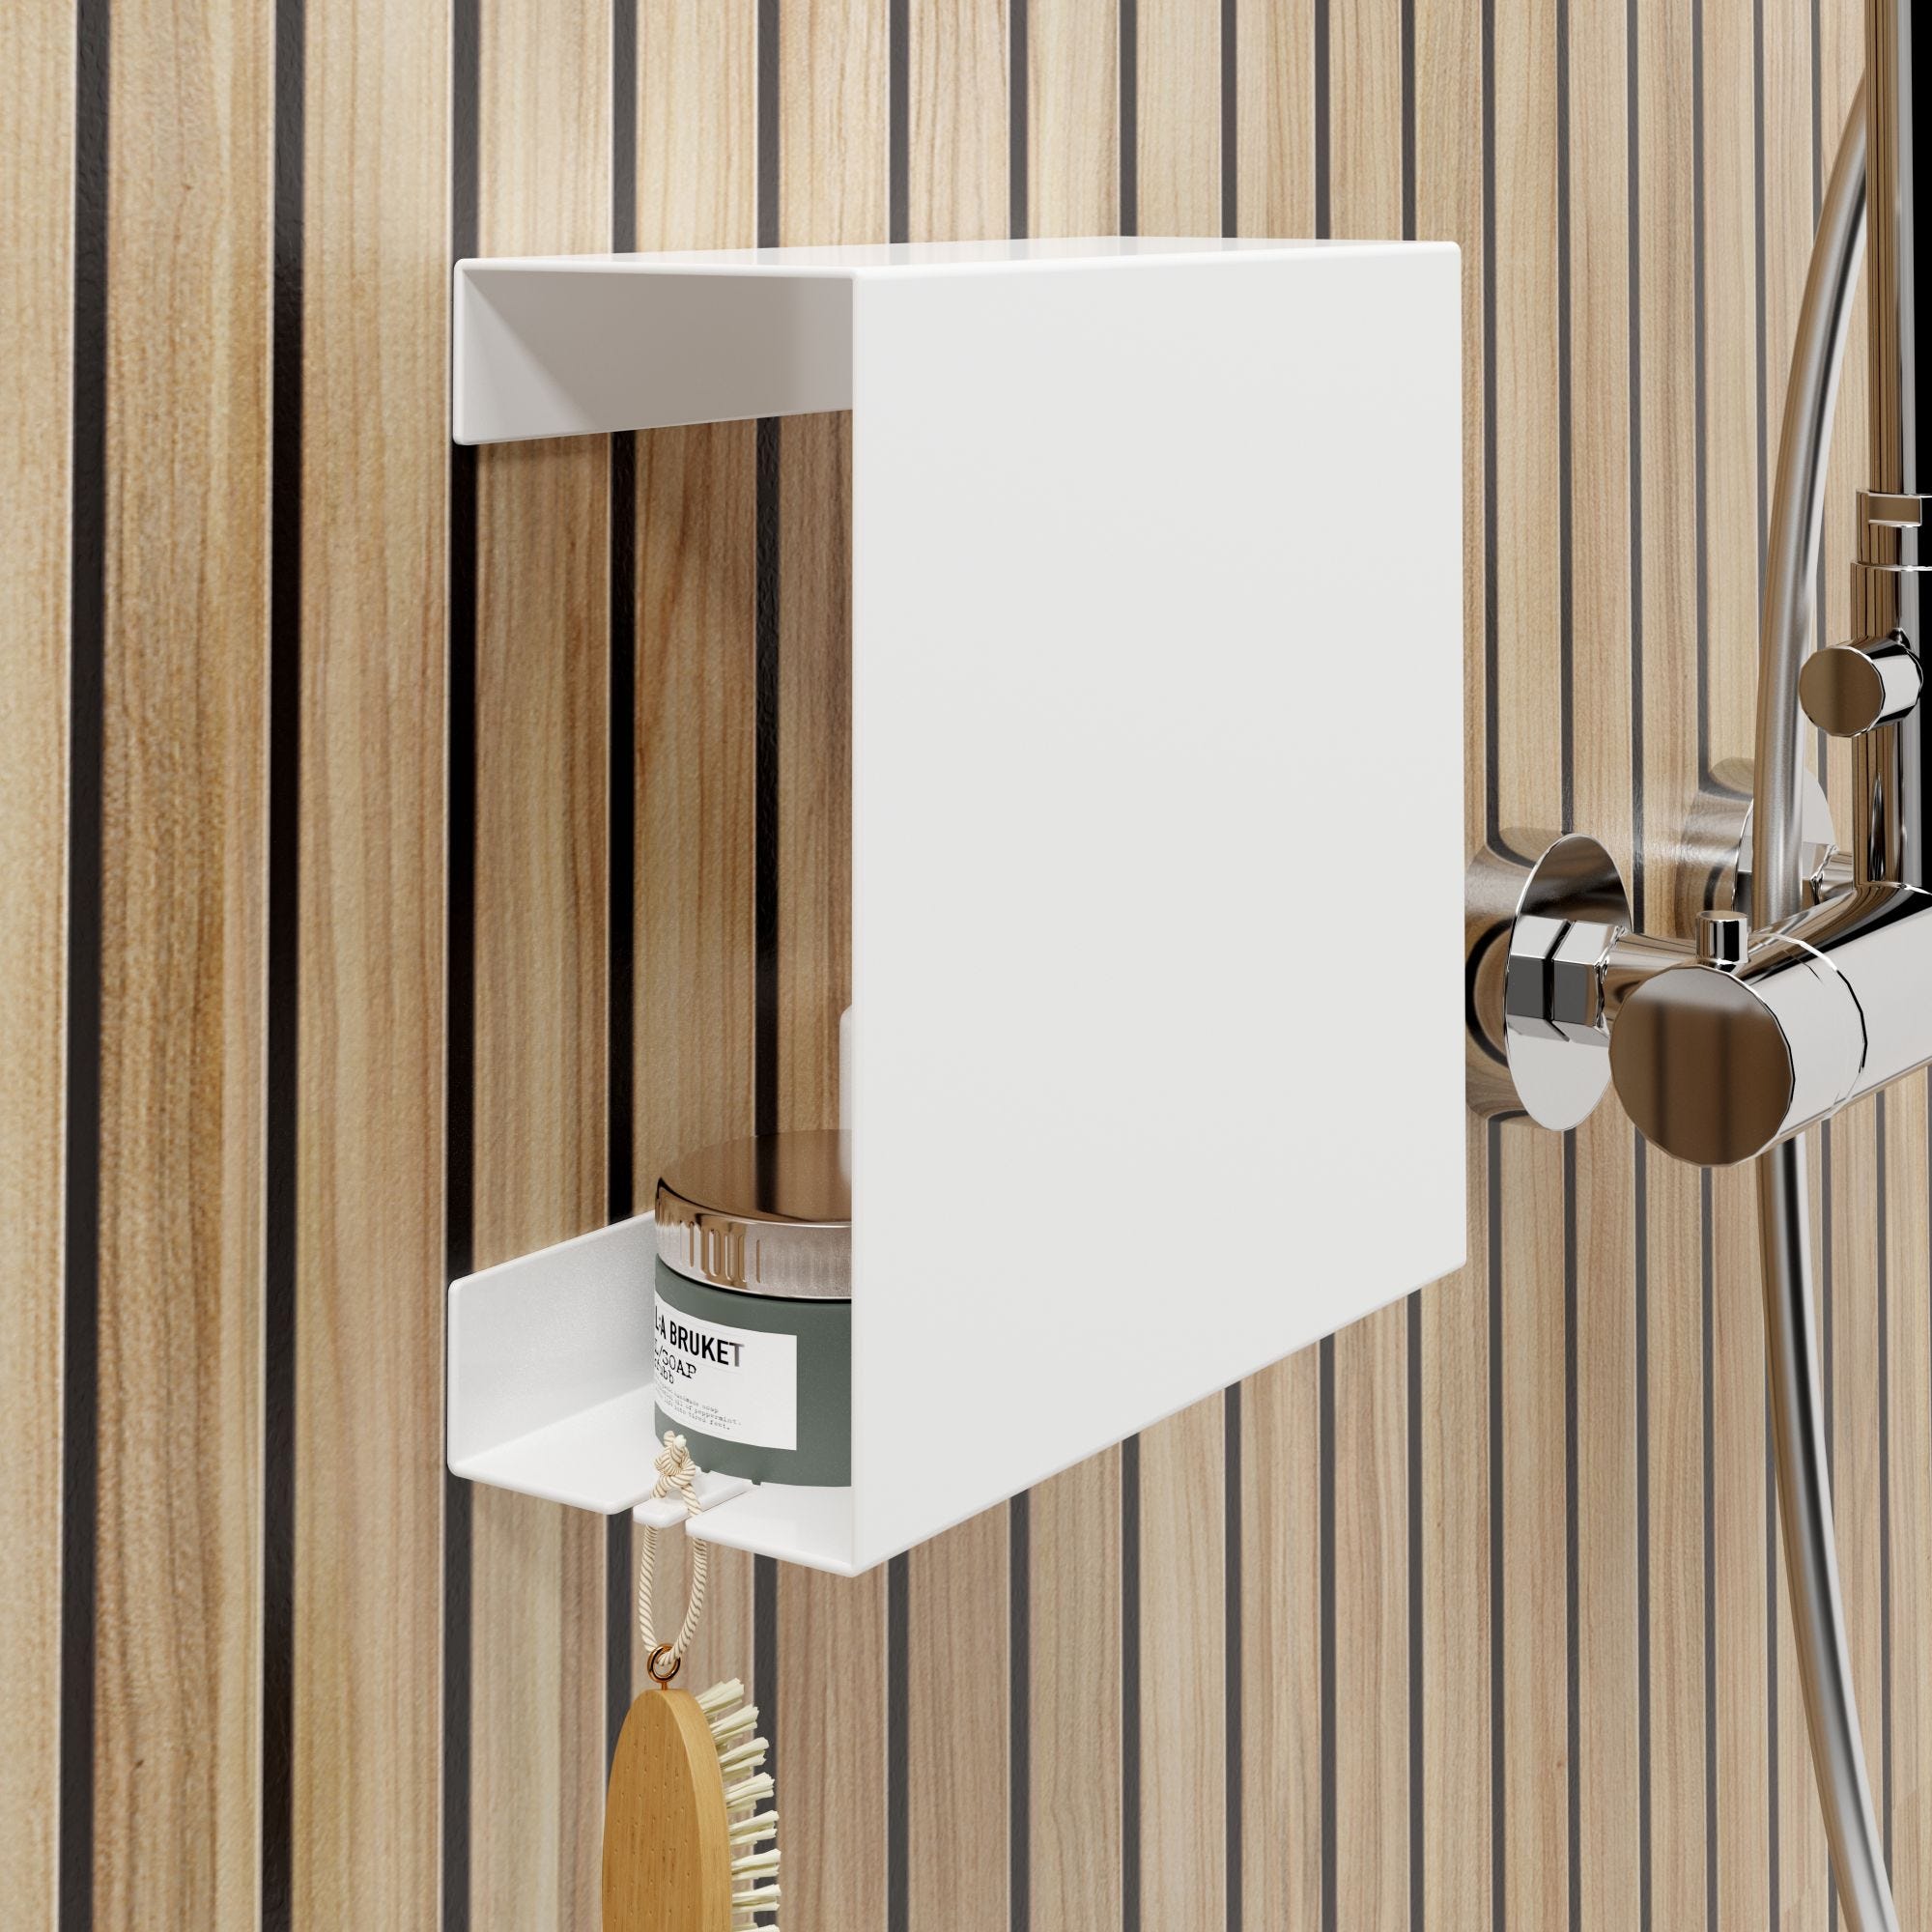 Schulte estante de ducha autoadhesiva, sin taladrar, 22,5 x 9,5 x 22,5 cm,  blanco mate, almacenamiento para la ducha